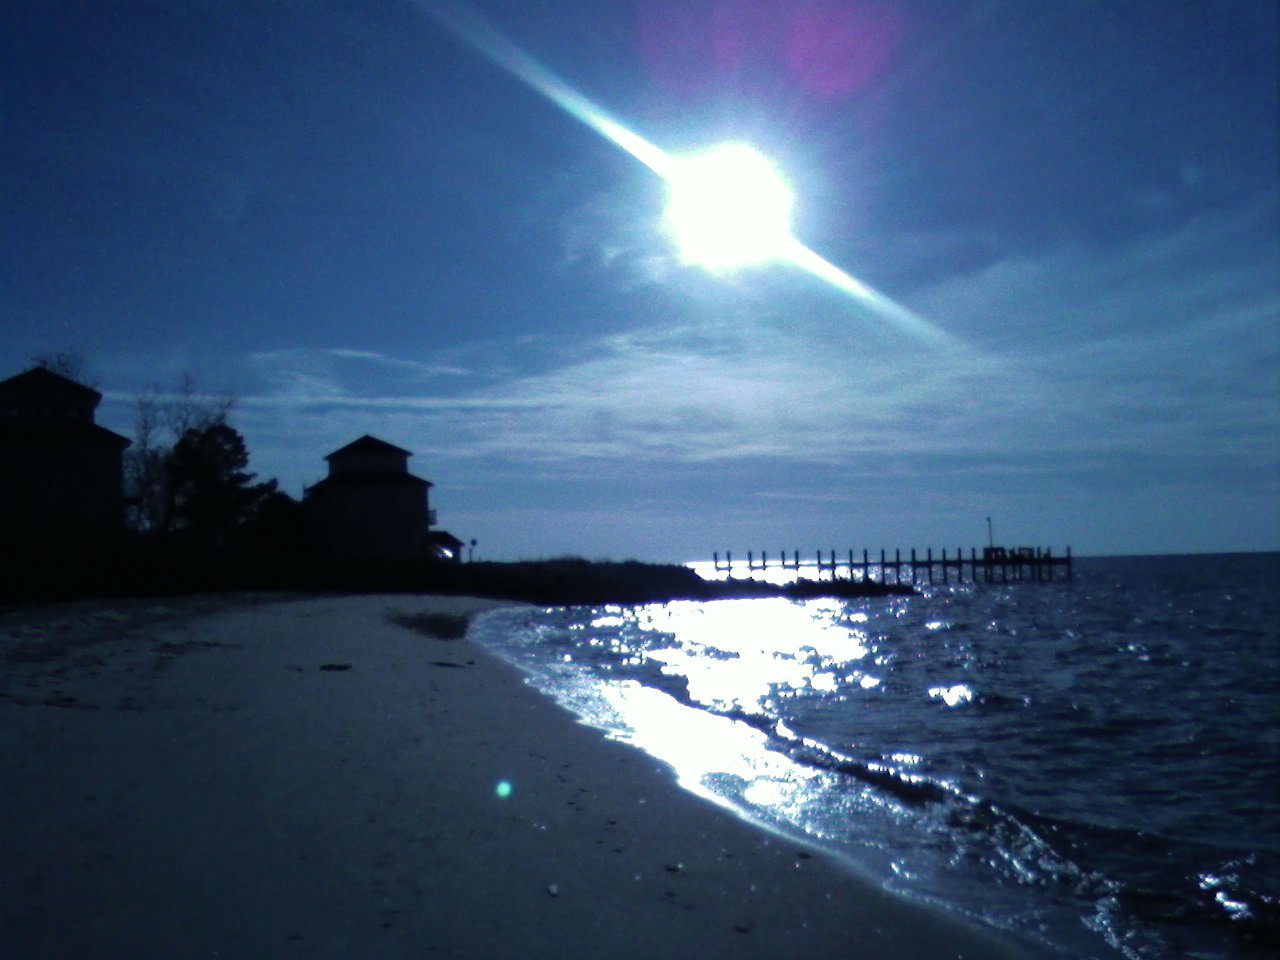 Deal Island, MD: Moonlit Beach at Deal Island